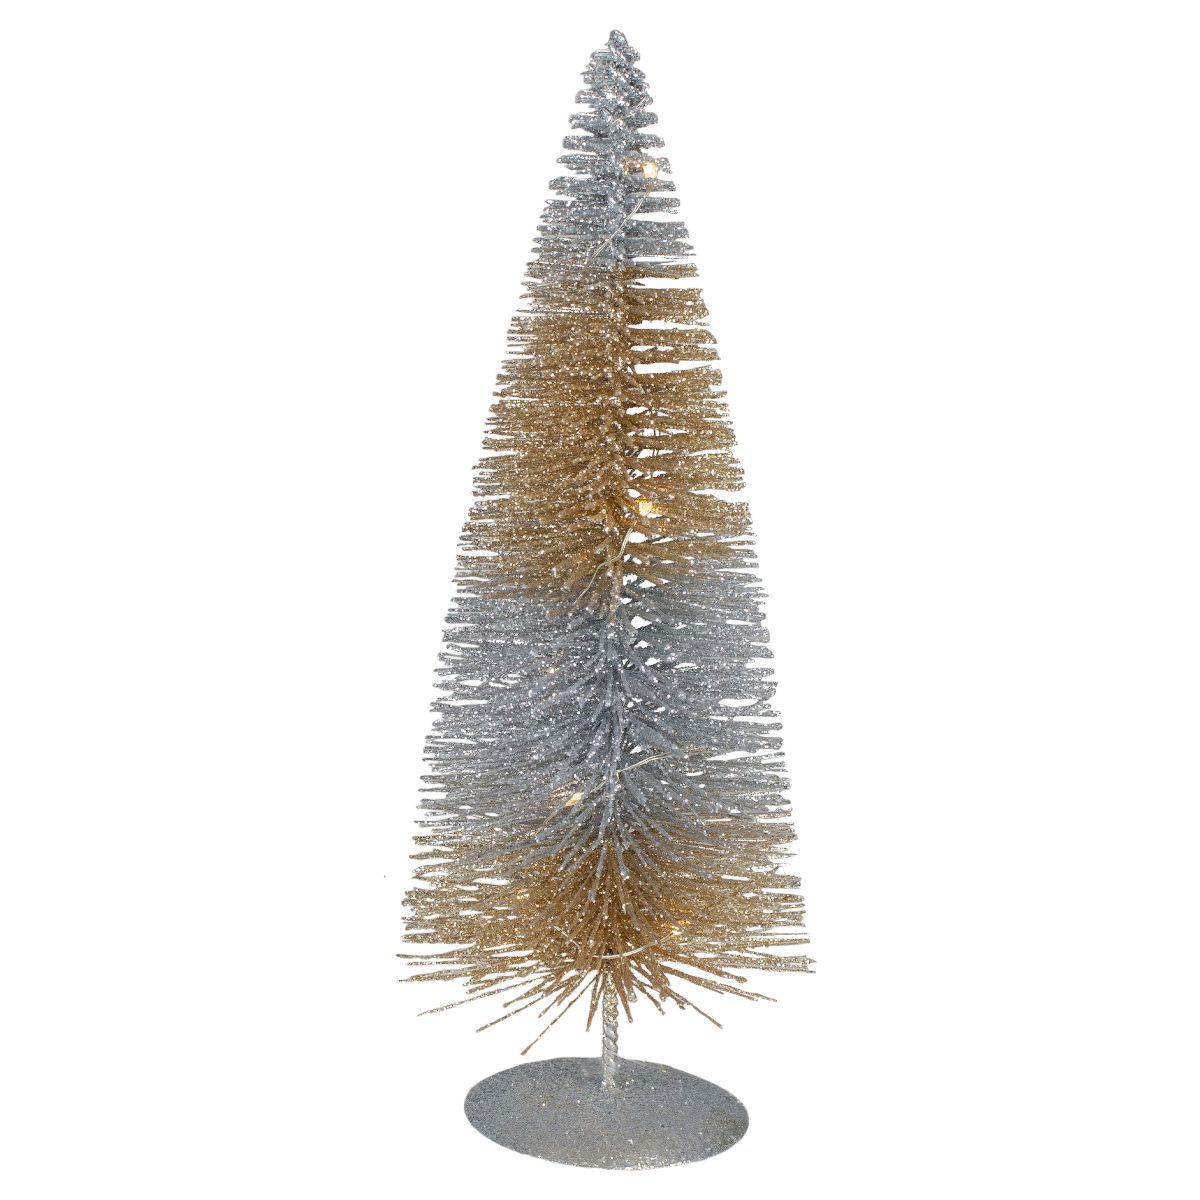 Northlight 10" LED Lighted B/O Silver and Gold Sisal Mini Christmas Tree - Warm White Lights | Target